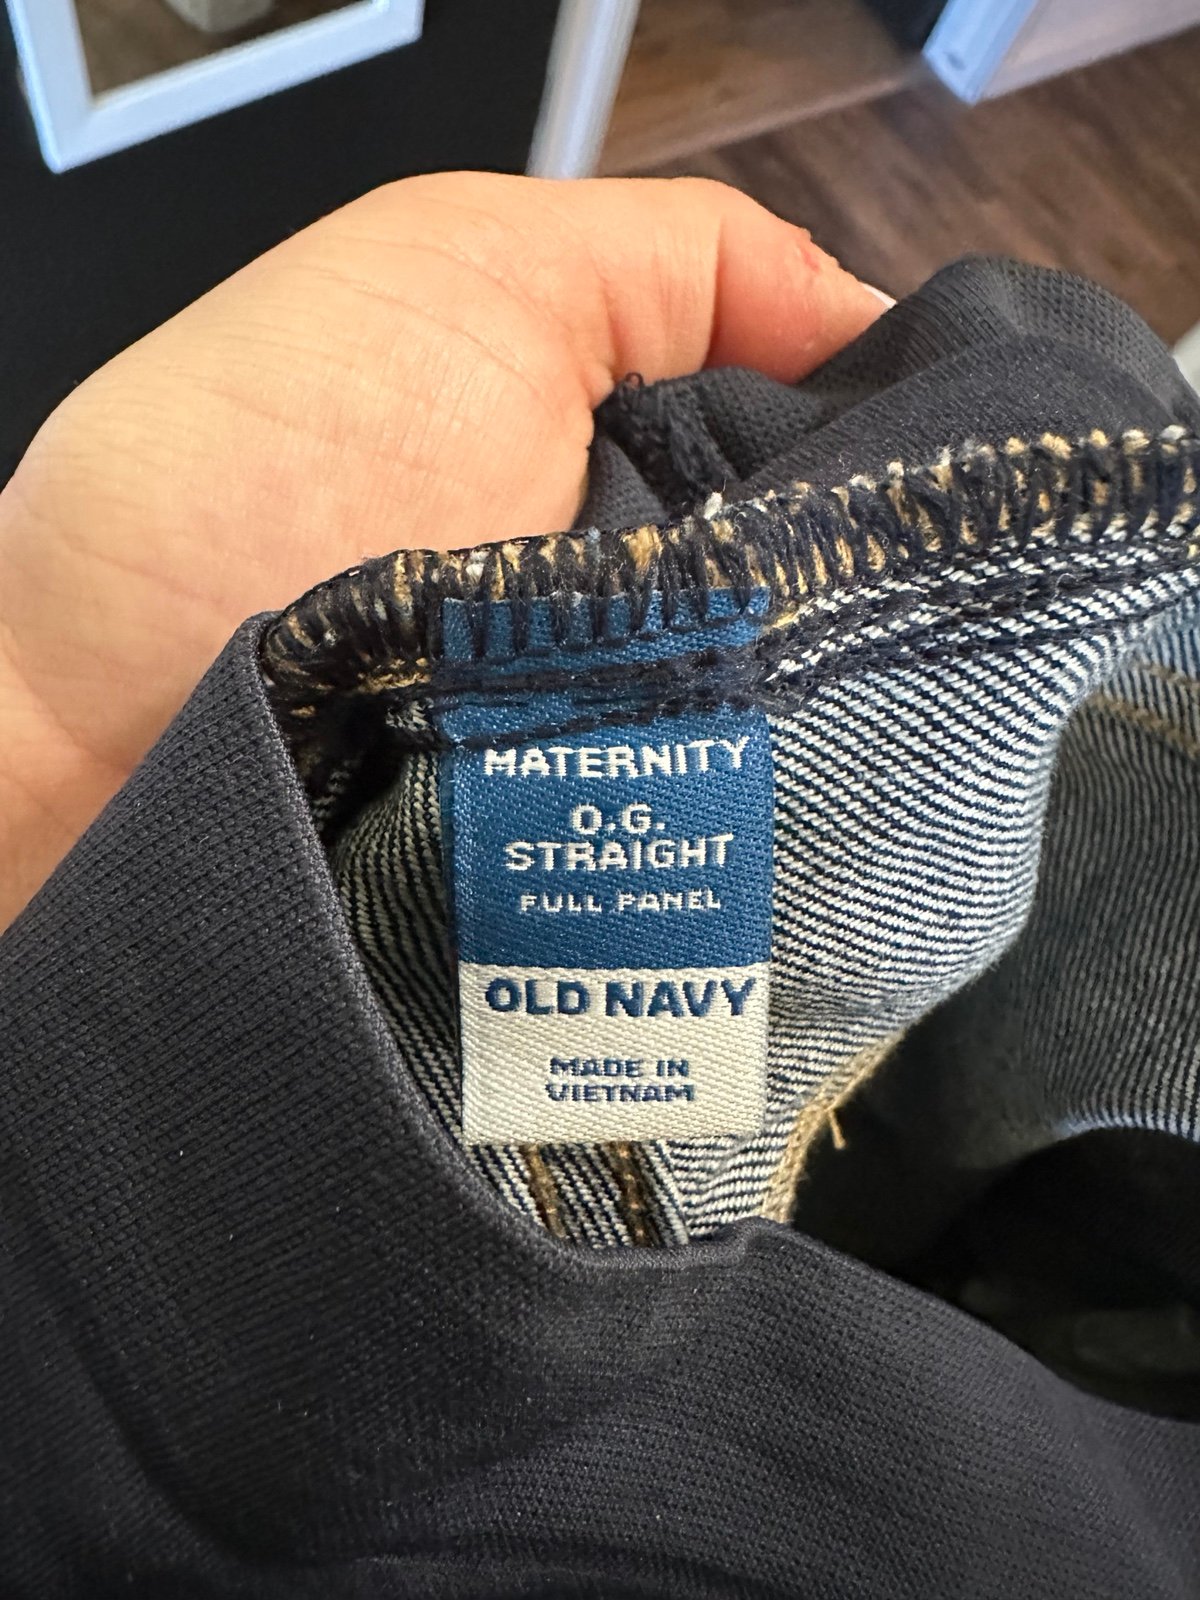 Old Navy maternity jeans fhc52nIDN